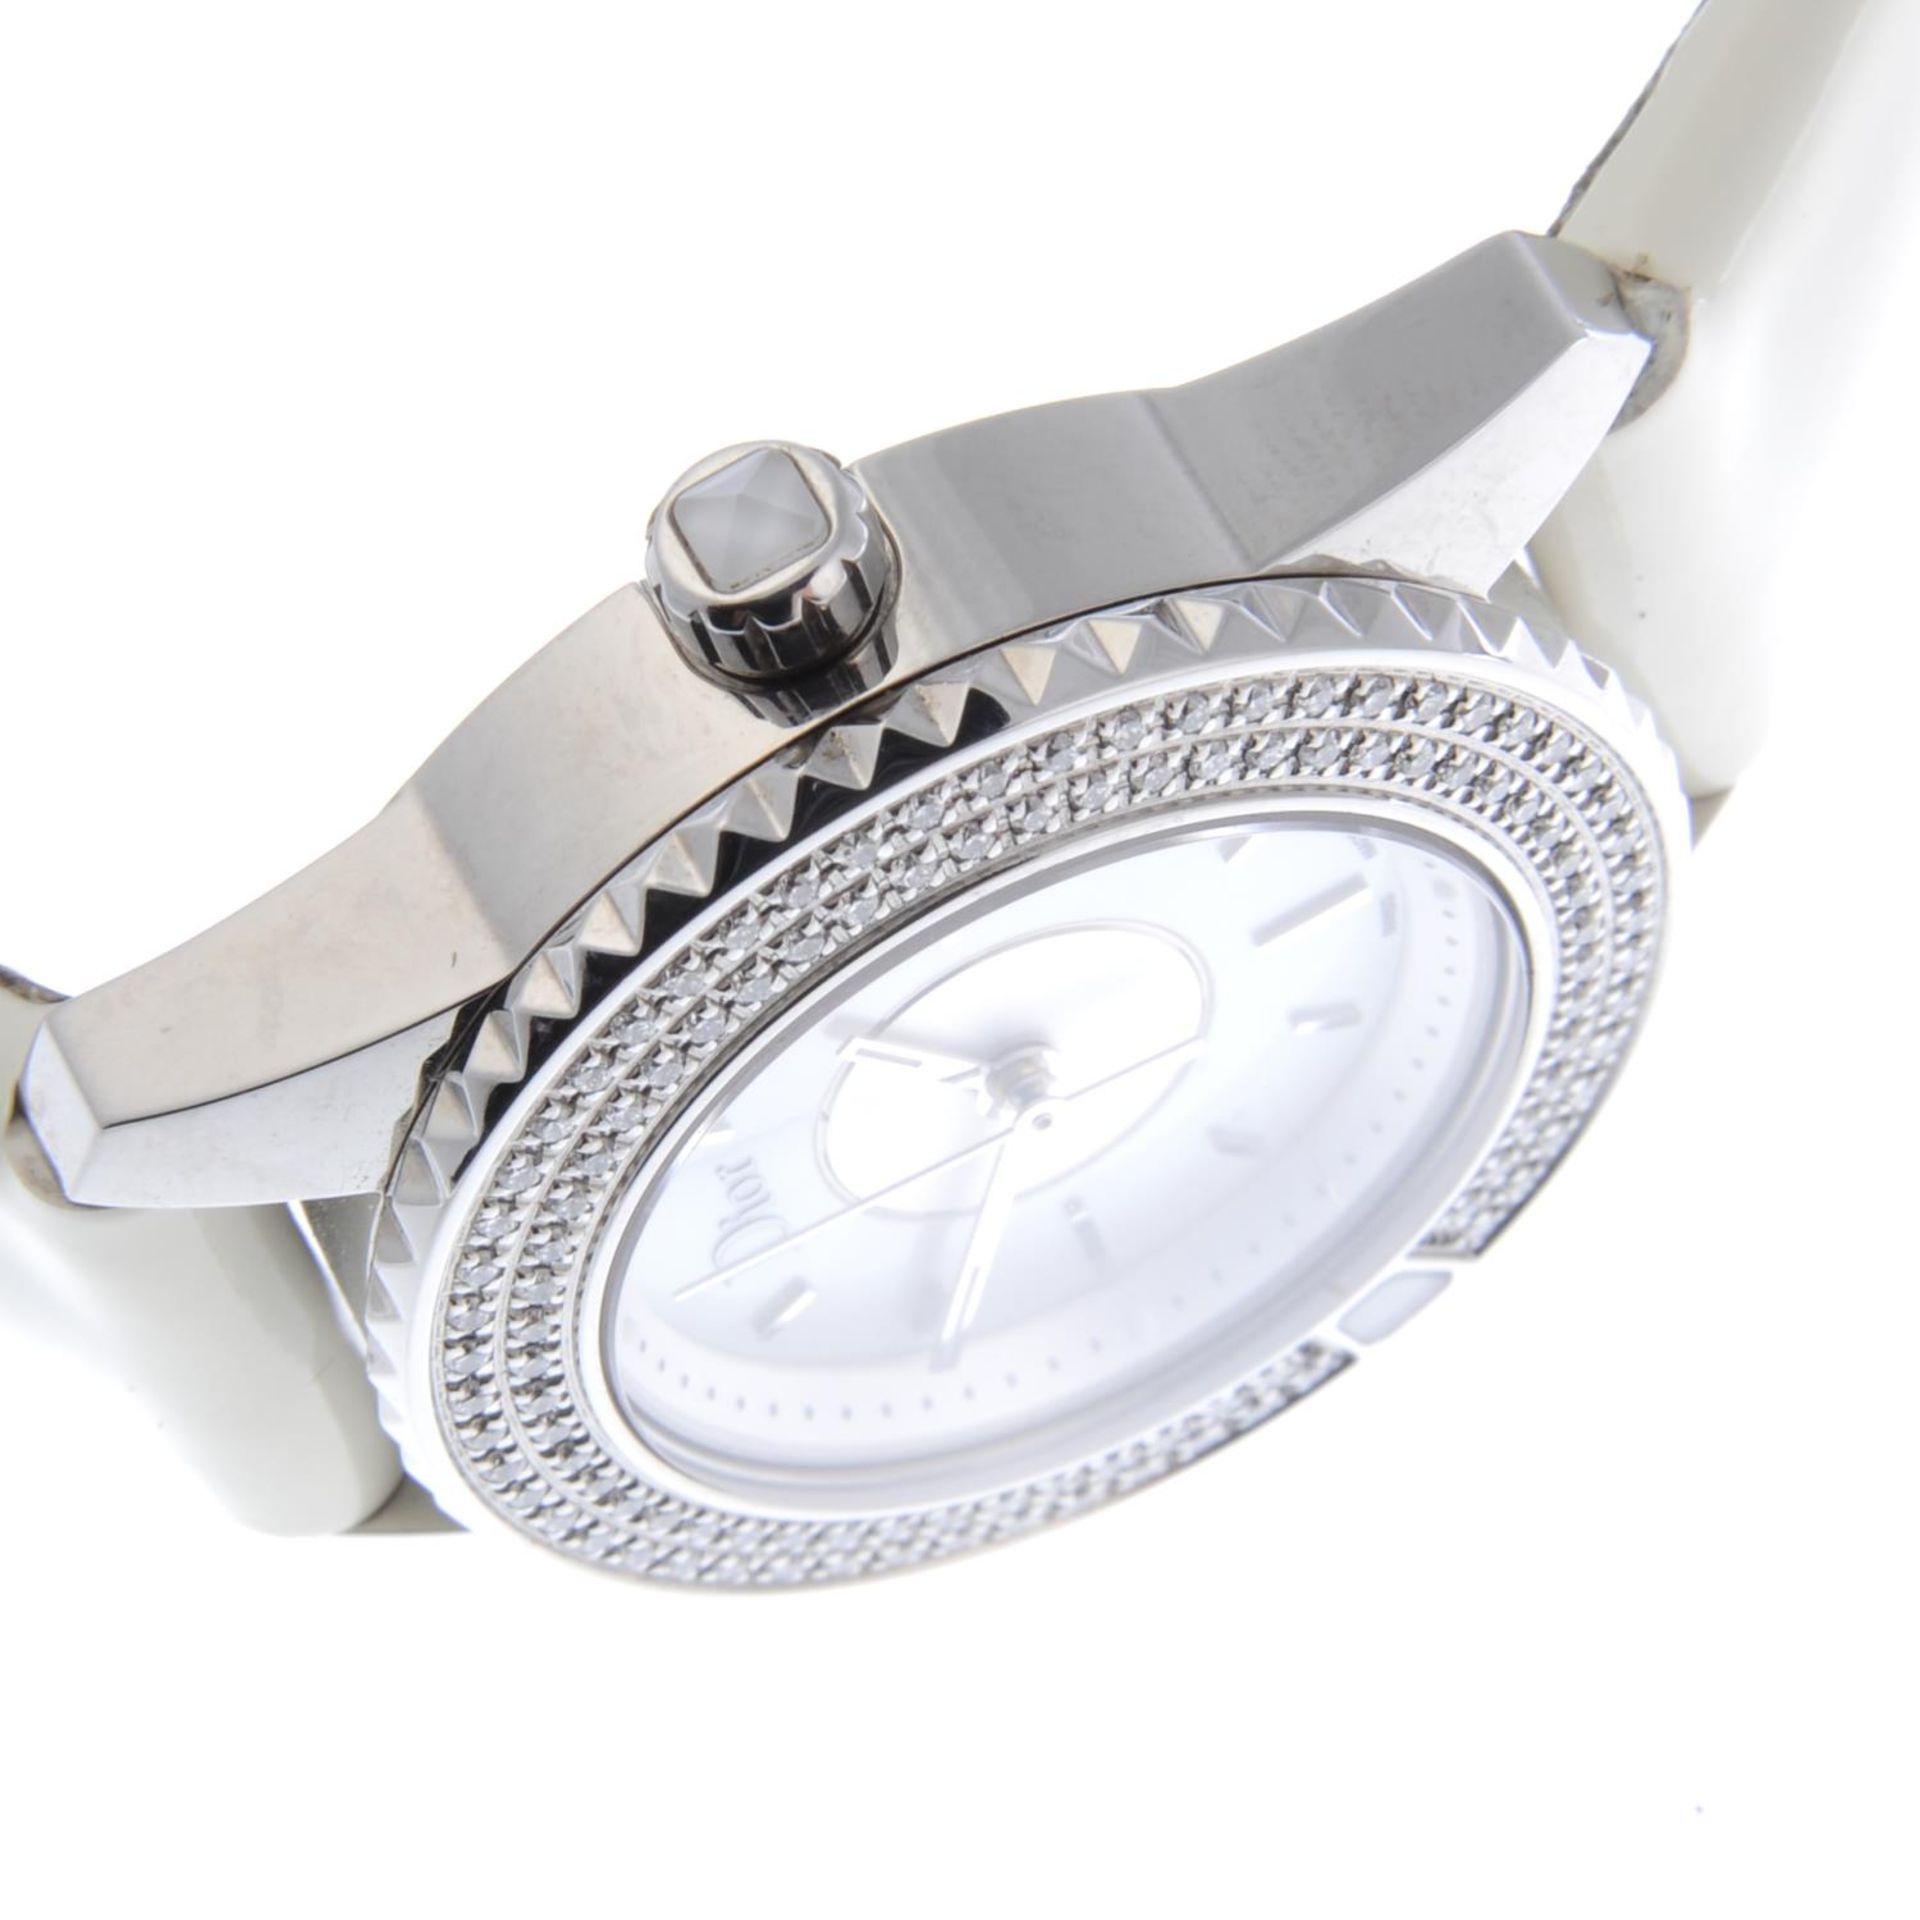 DIOR - a lady's Christal wrist watch. - Image 4 of 4